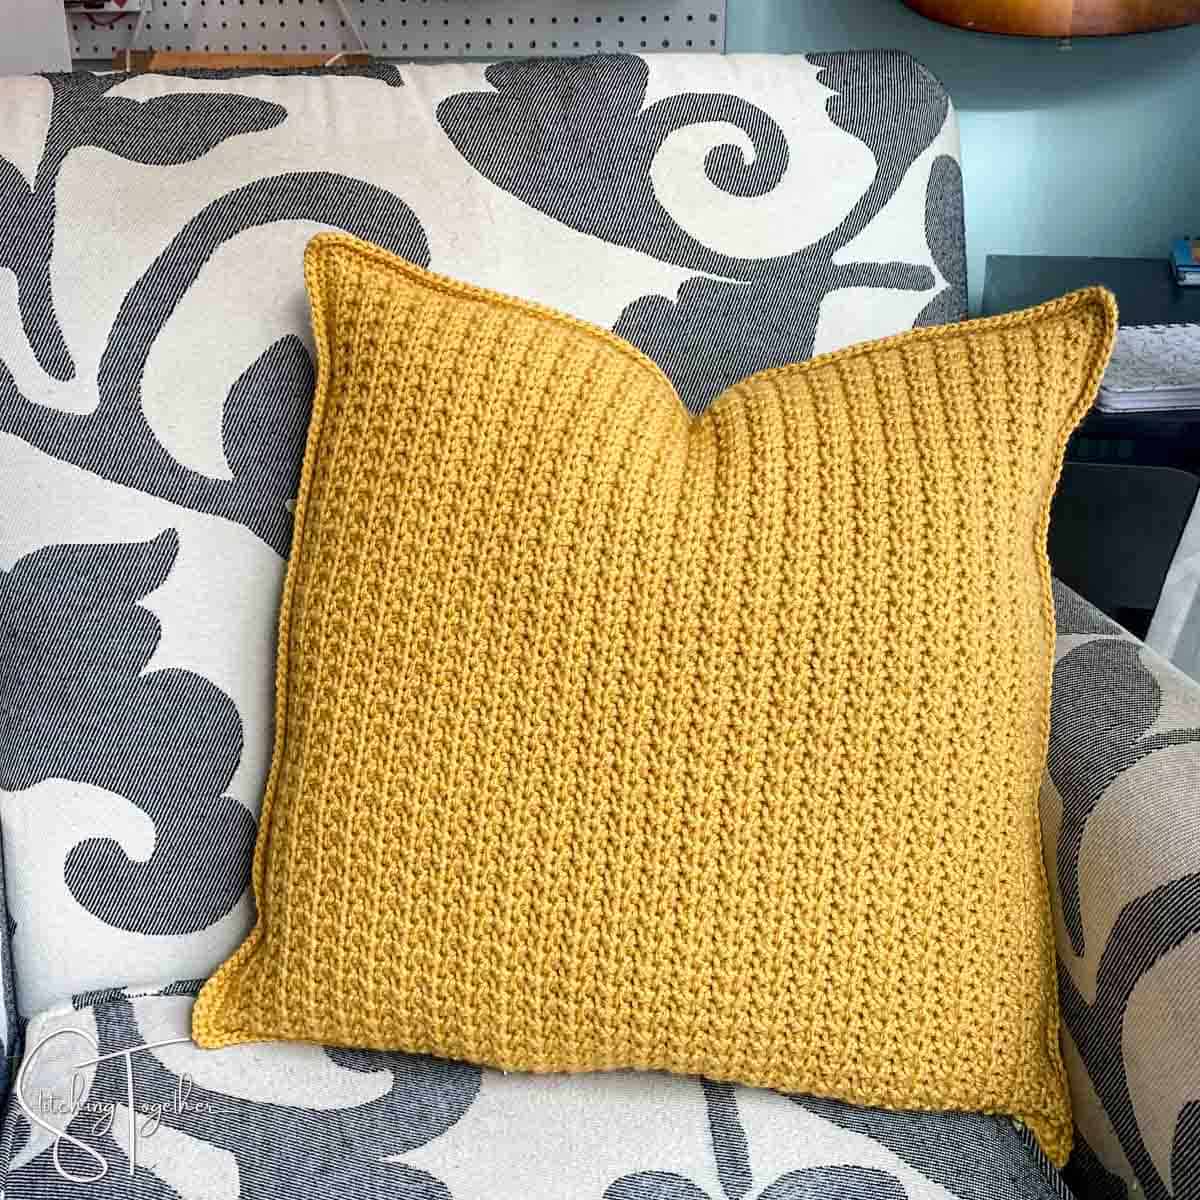 https://www.stitching-together.com/wp-content/uploads/2022/10/textured-crochet-cushion.jpg